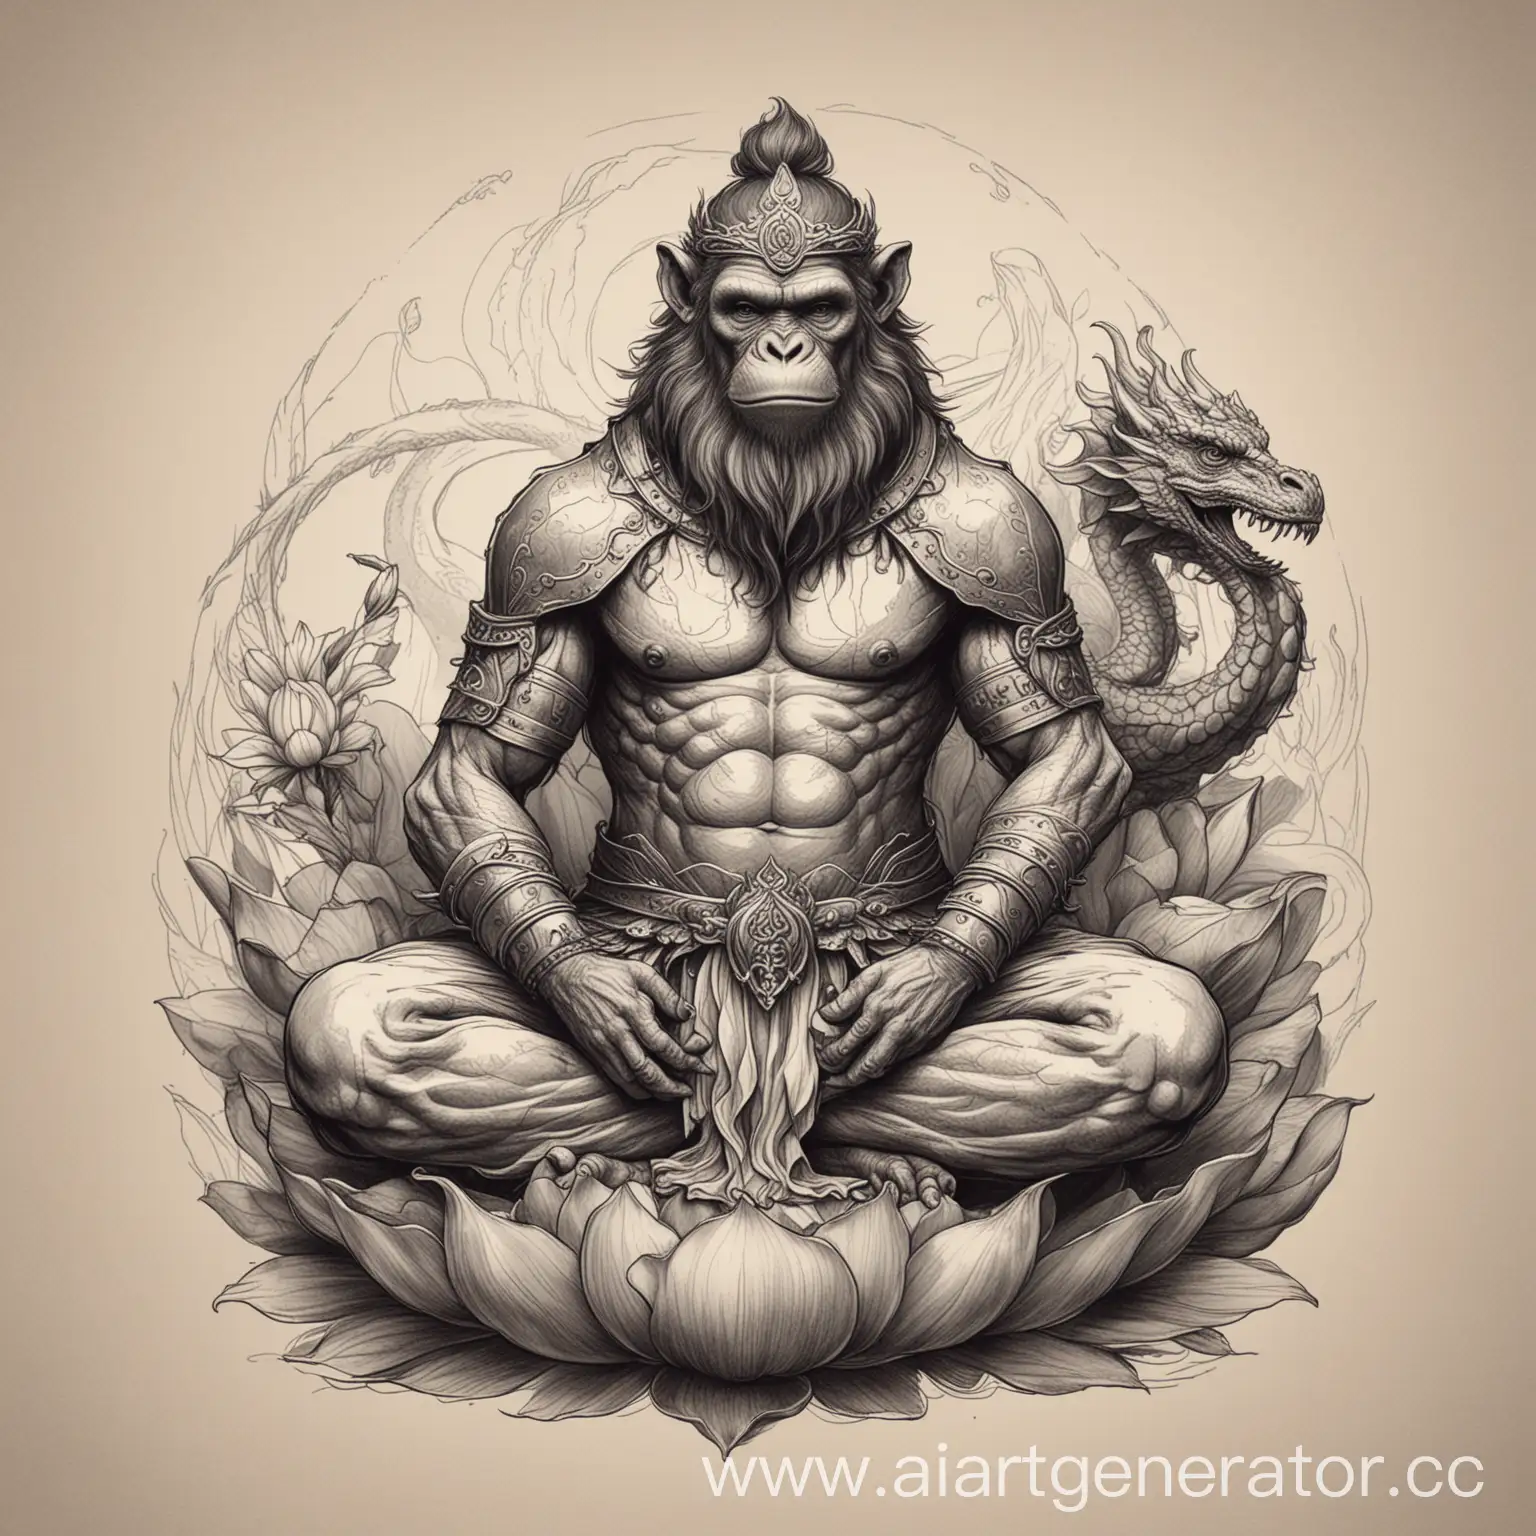 Warrior-King-Ape-Lotus-Pose-with-Dragon-Minimalist-Black-and-White-Sketch